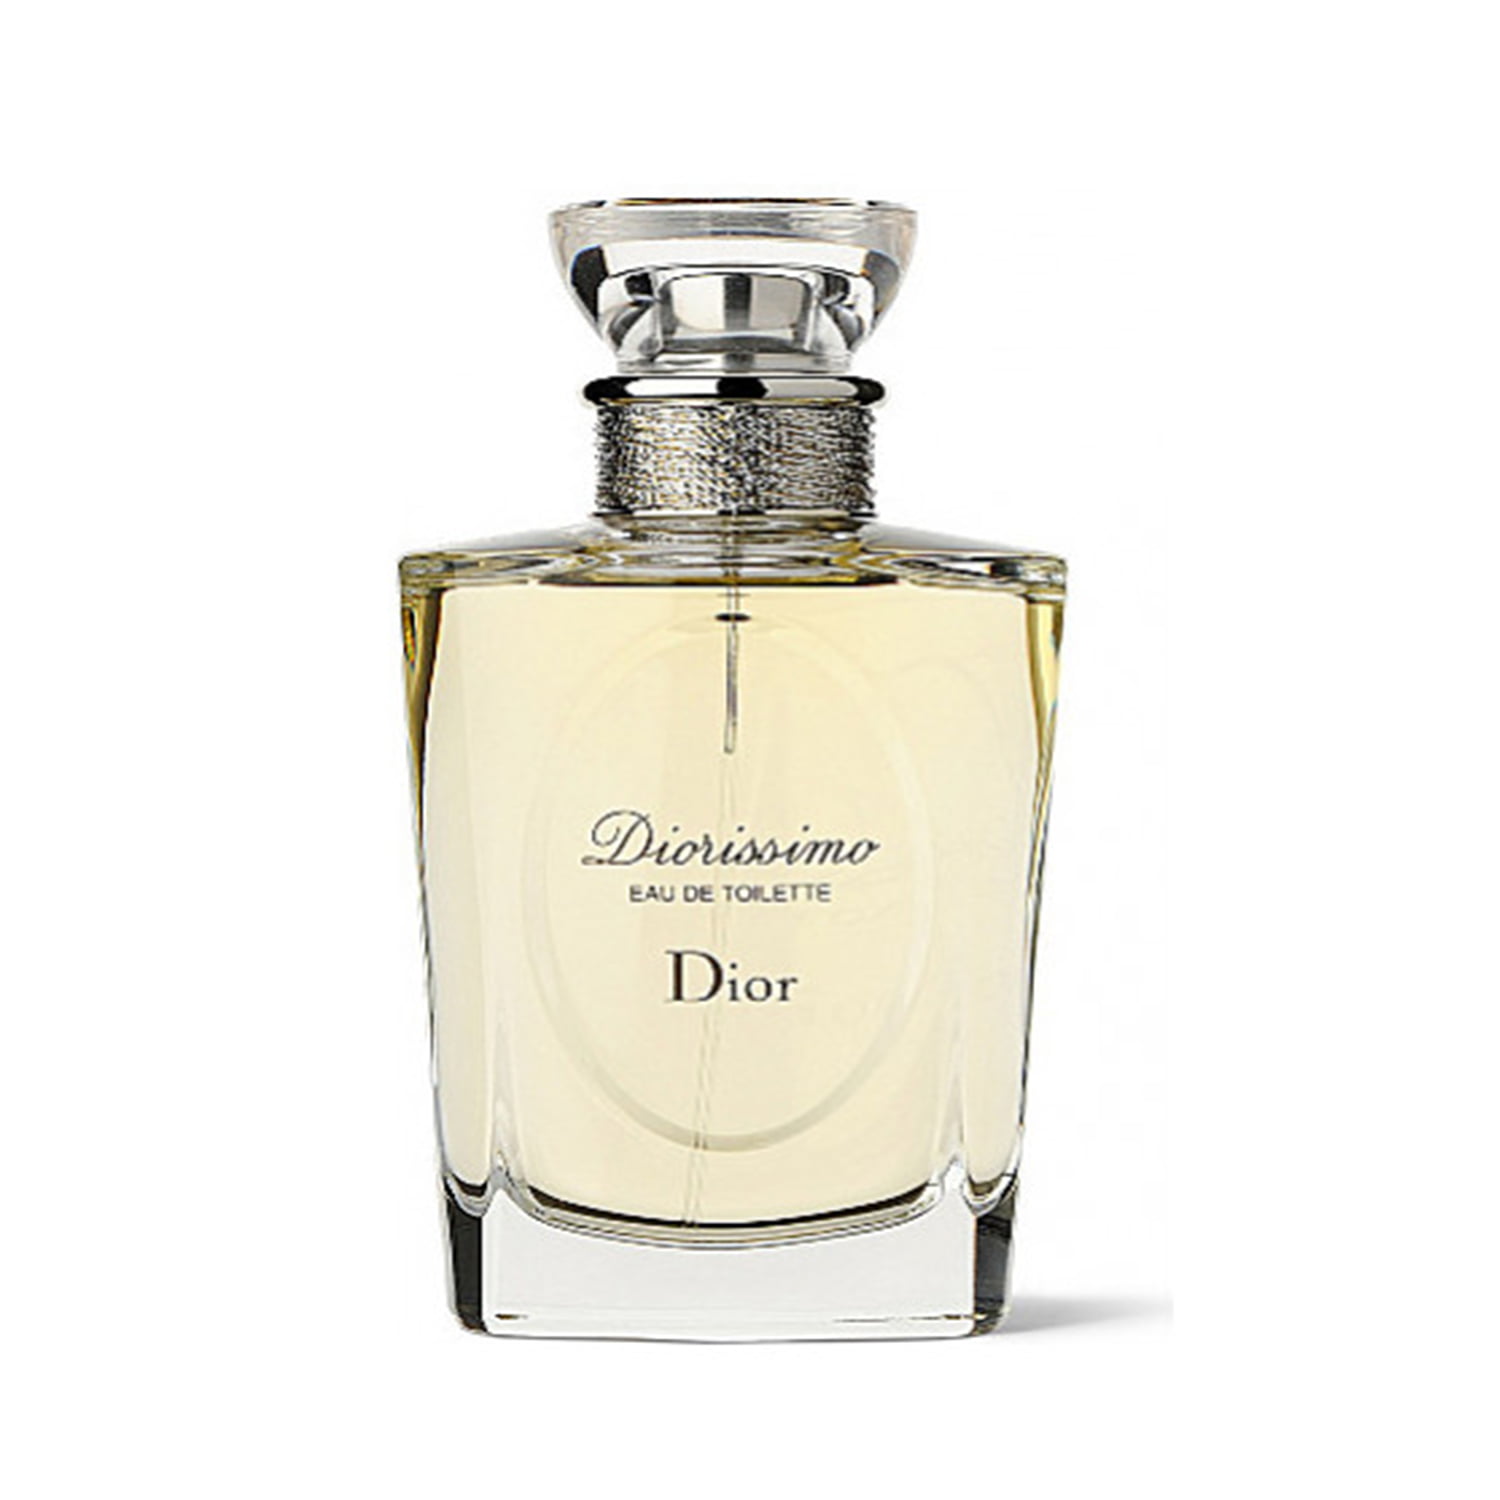 Dior Diorissimo Eau de Toilette, Perfume for Women, 1.7 Oz